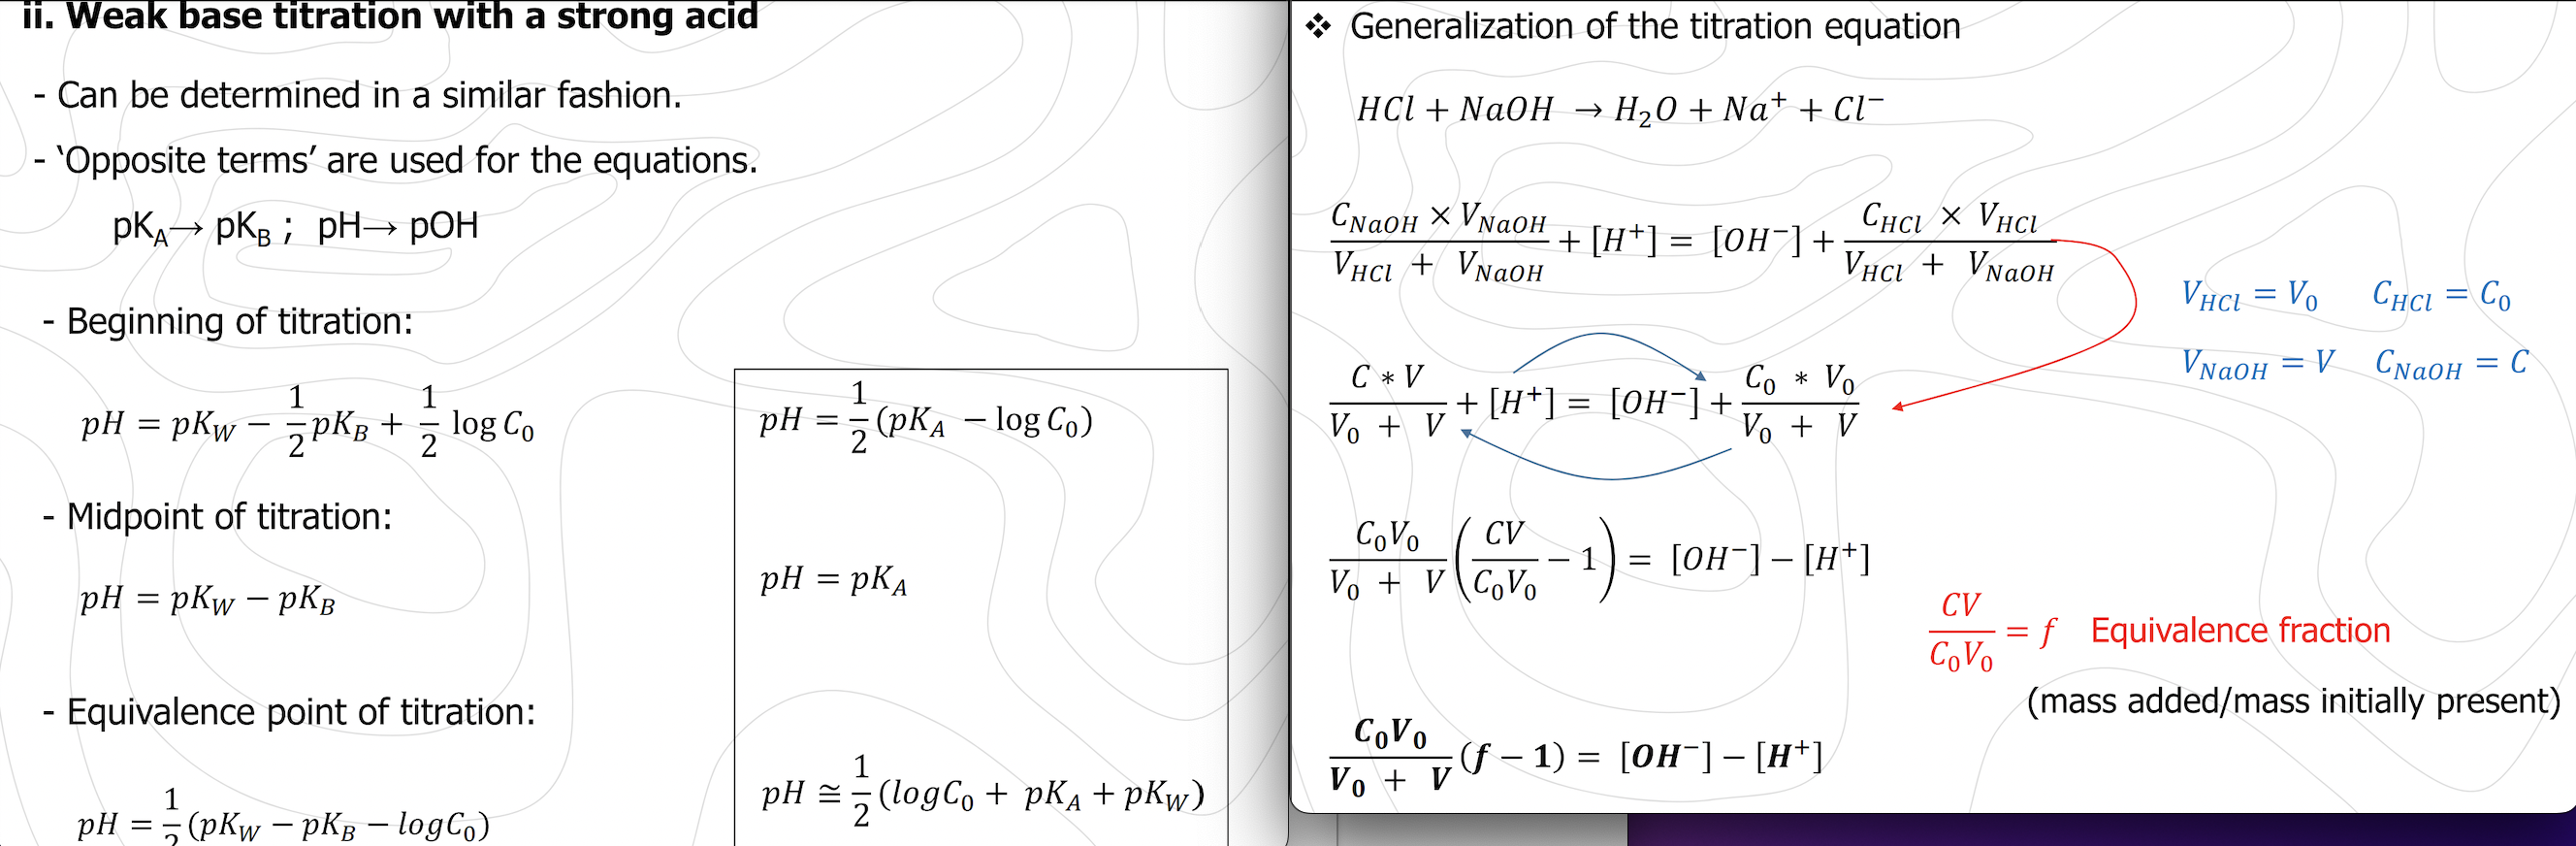 titration equation